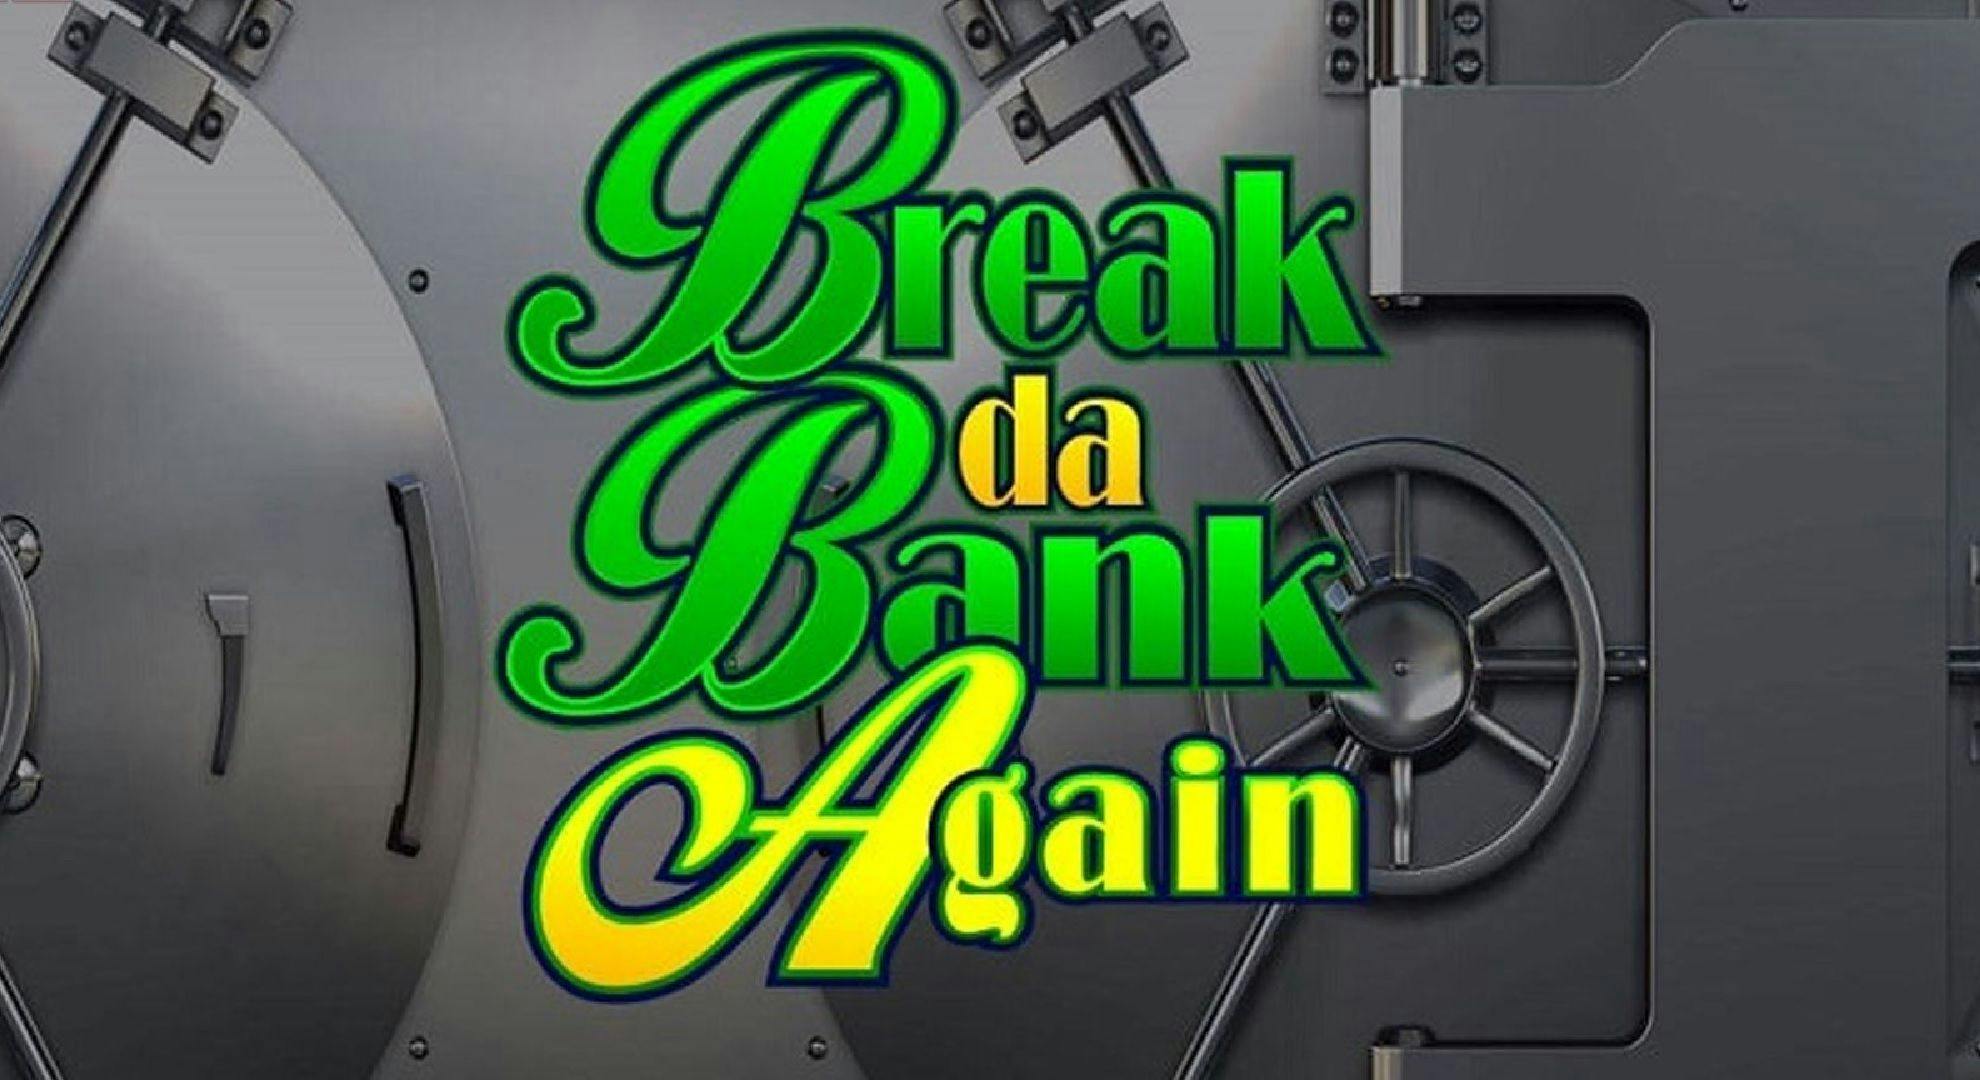 Break Da Bank Again Slot Online Free Play